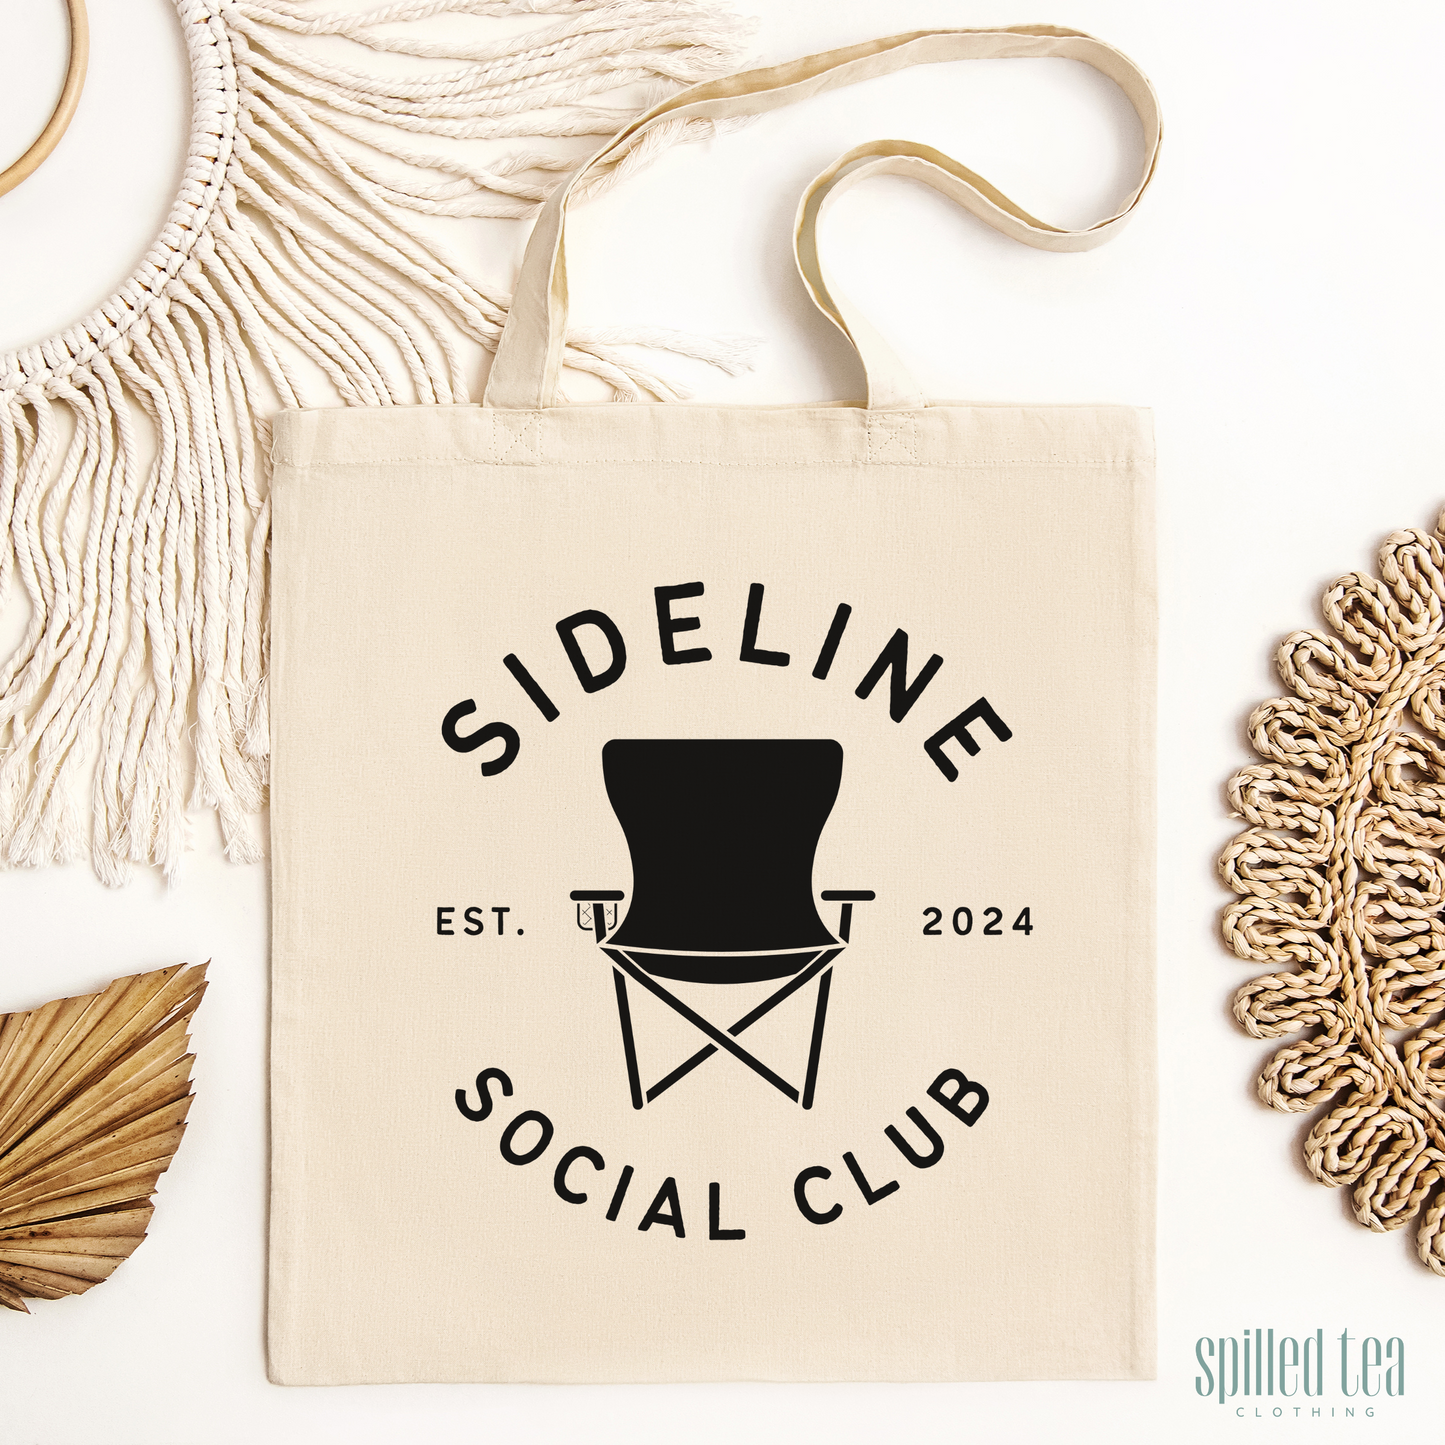 Sideline Social Club Tote